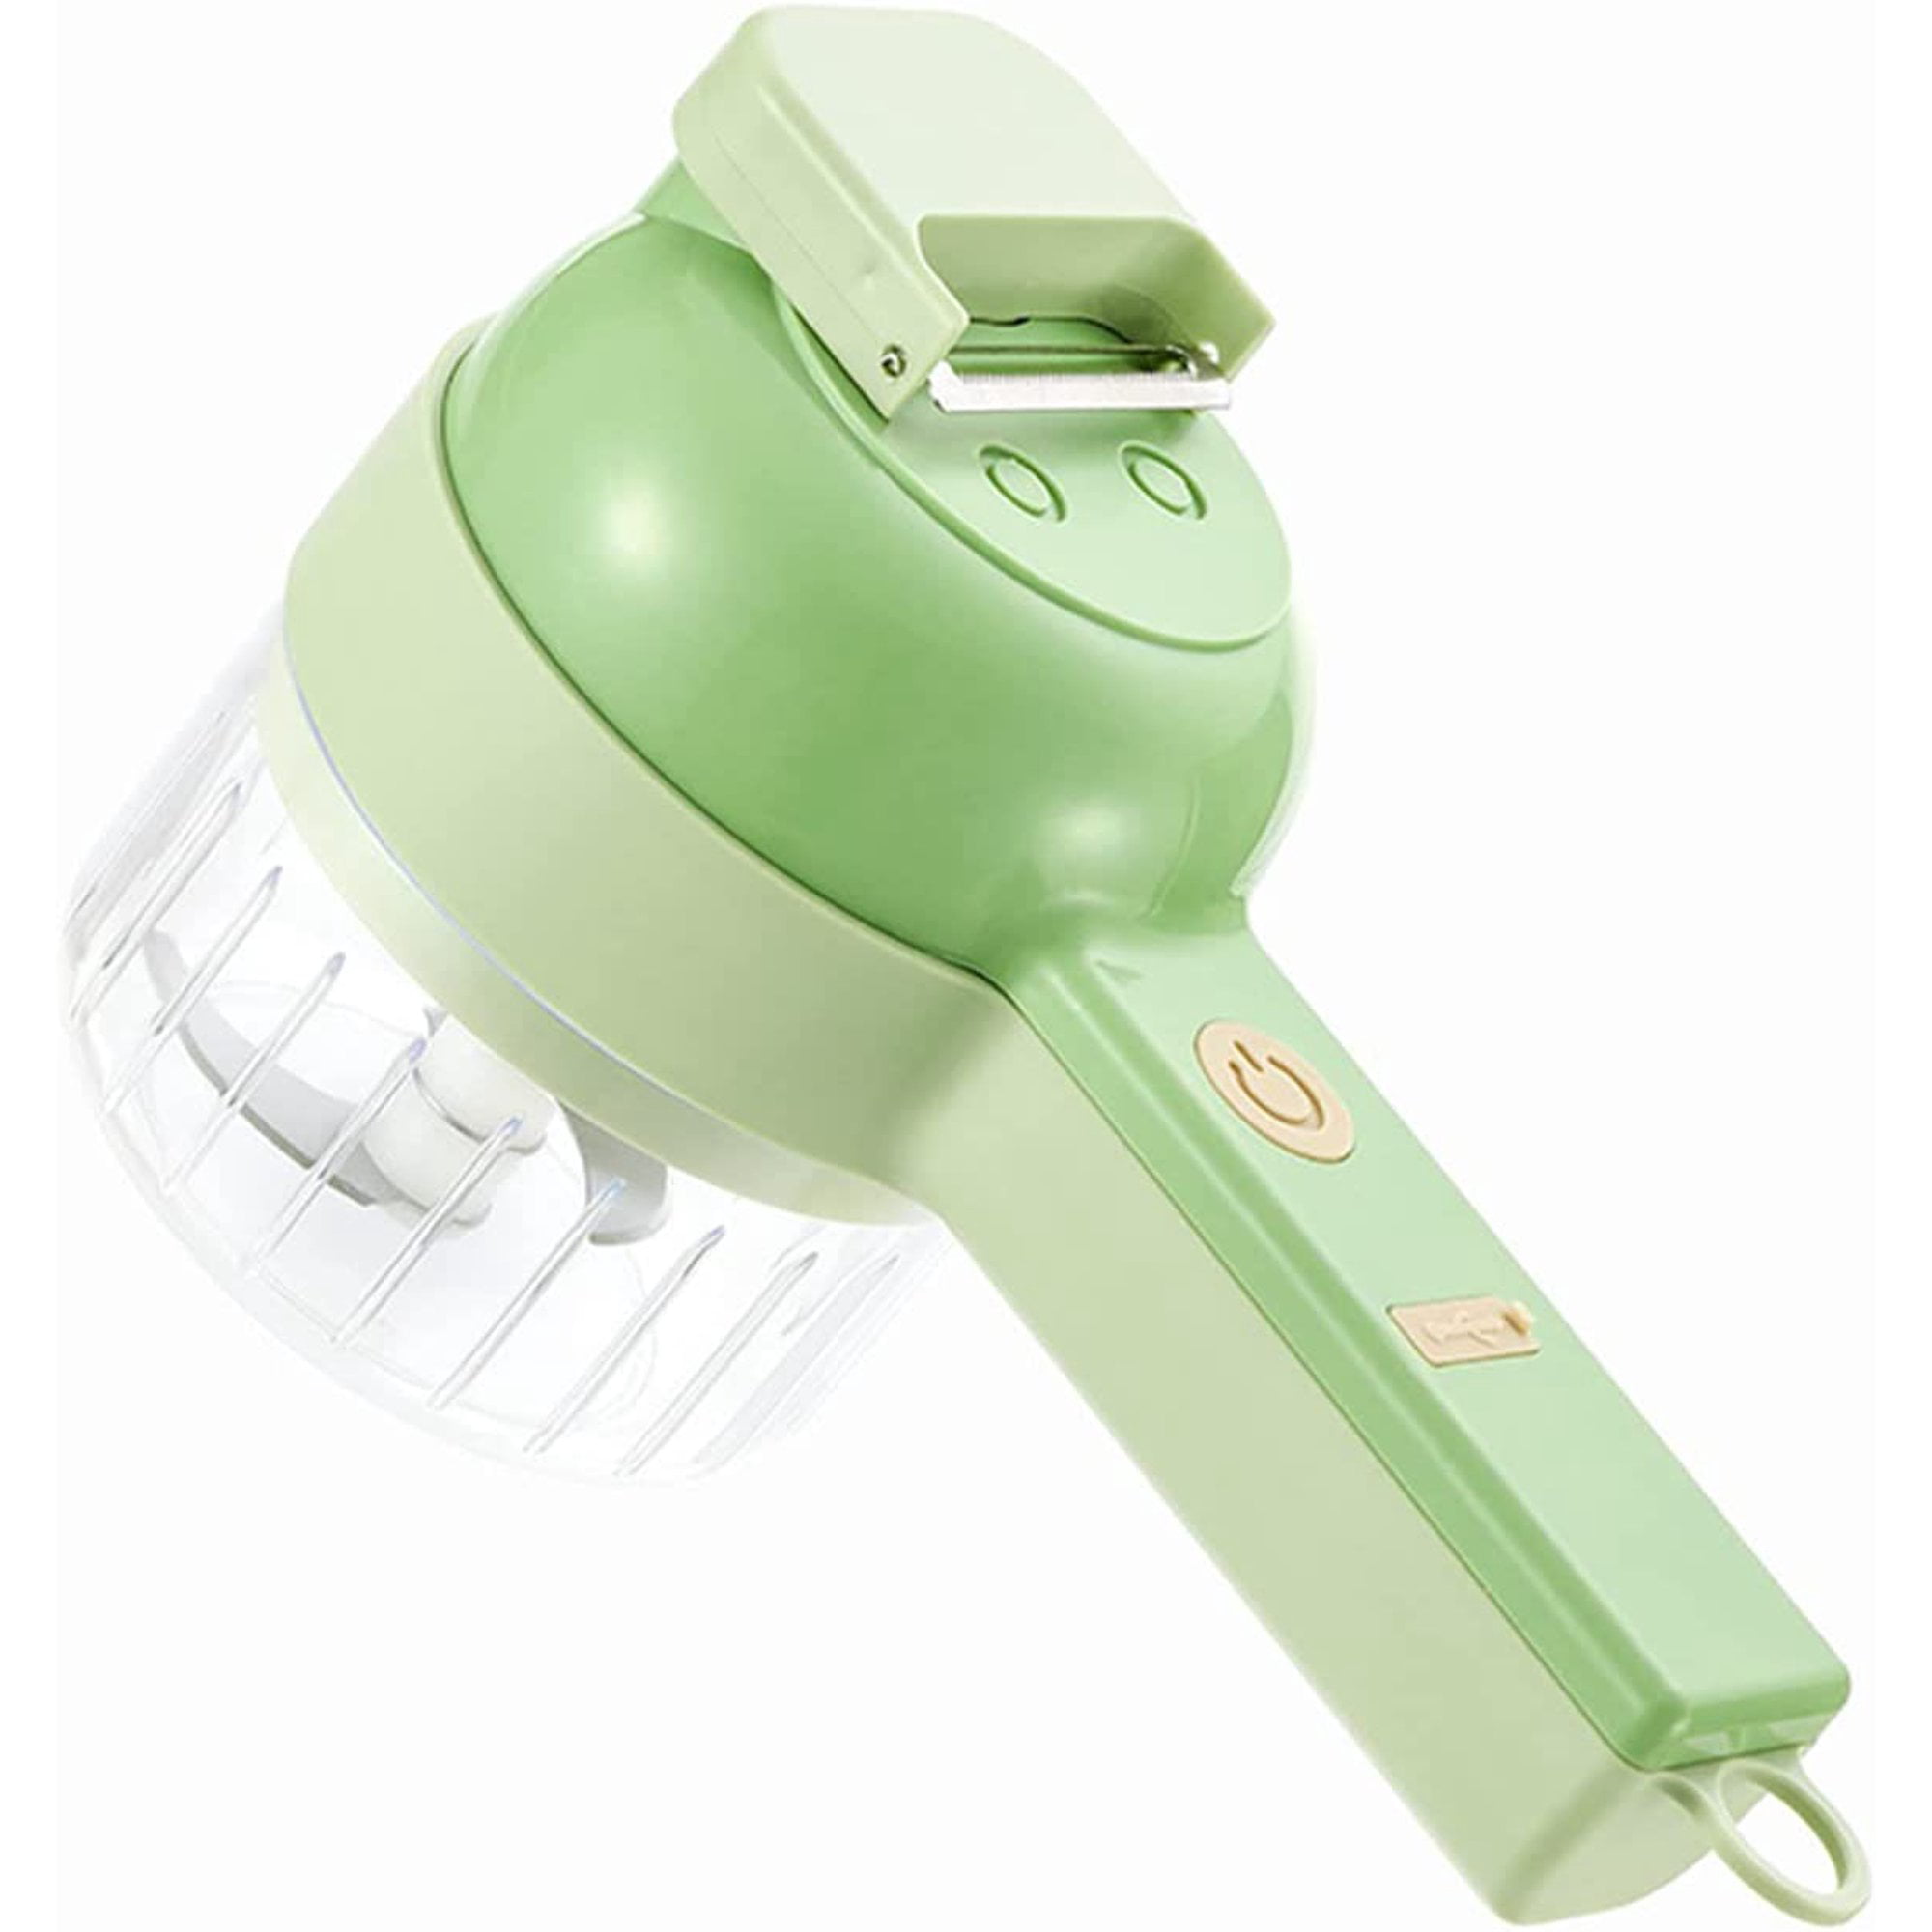 Grab&Slice™ - 4 In 1 Electric Vegetable Cutter and Slicer – Super